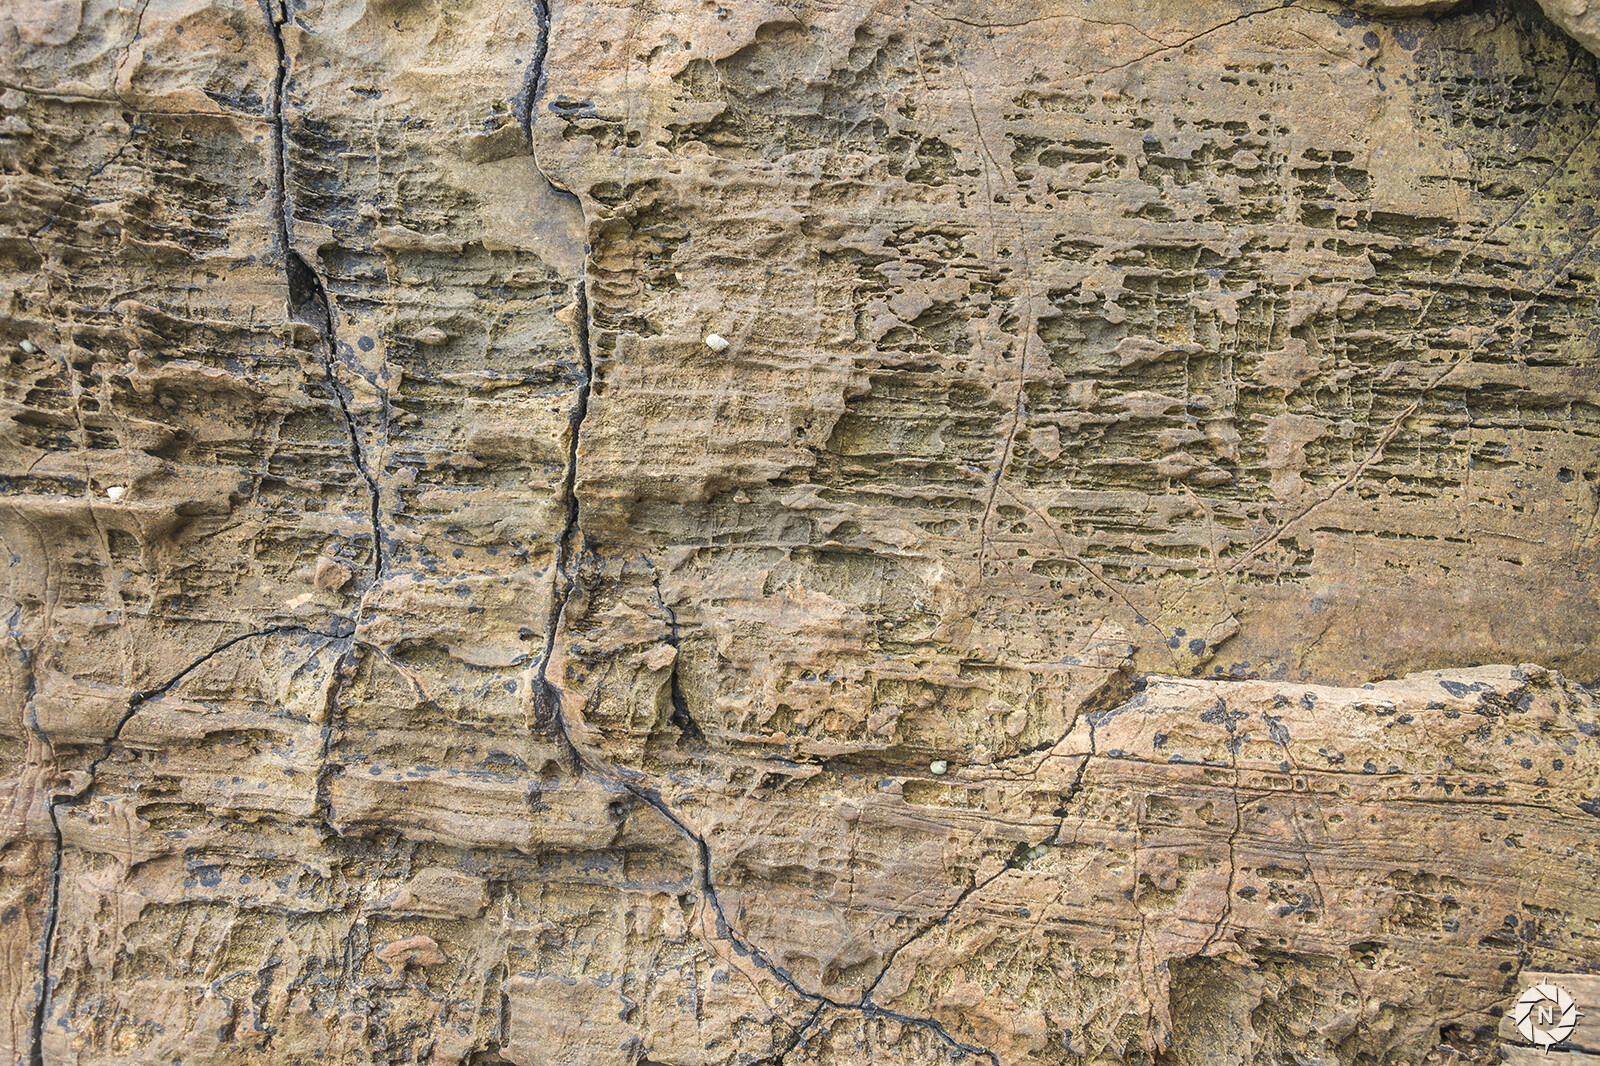 From the Texture Photo Pack: Rocks Cliffs

https://www.artstation.com/a/165916